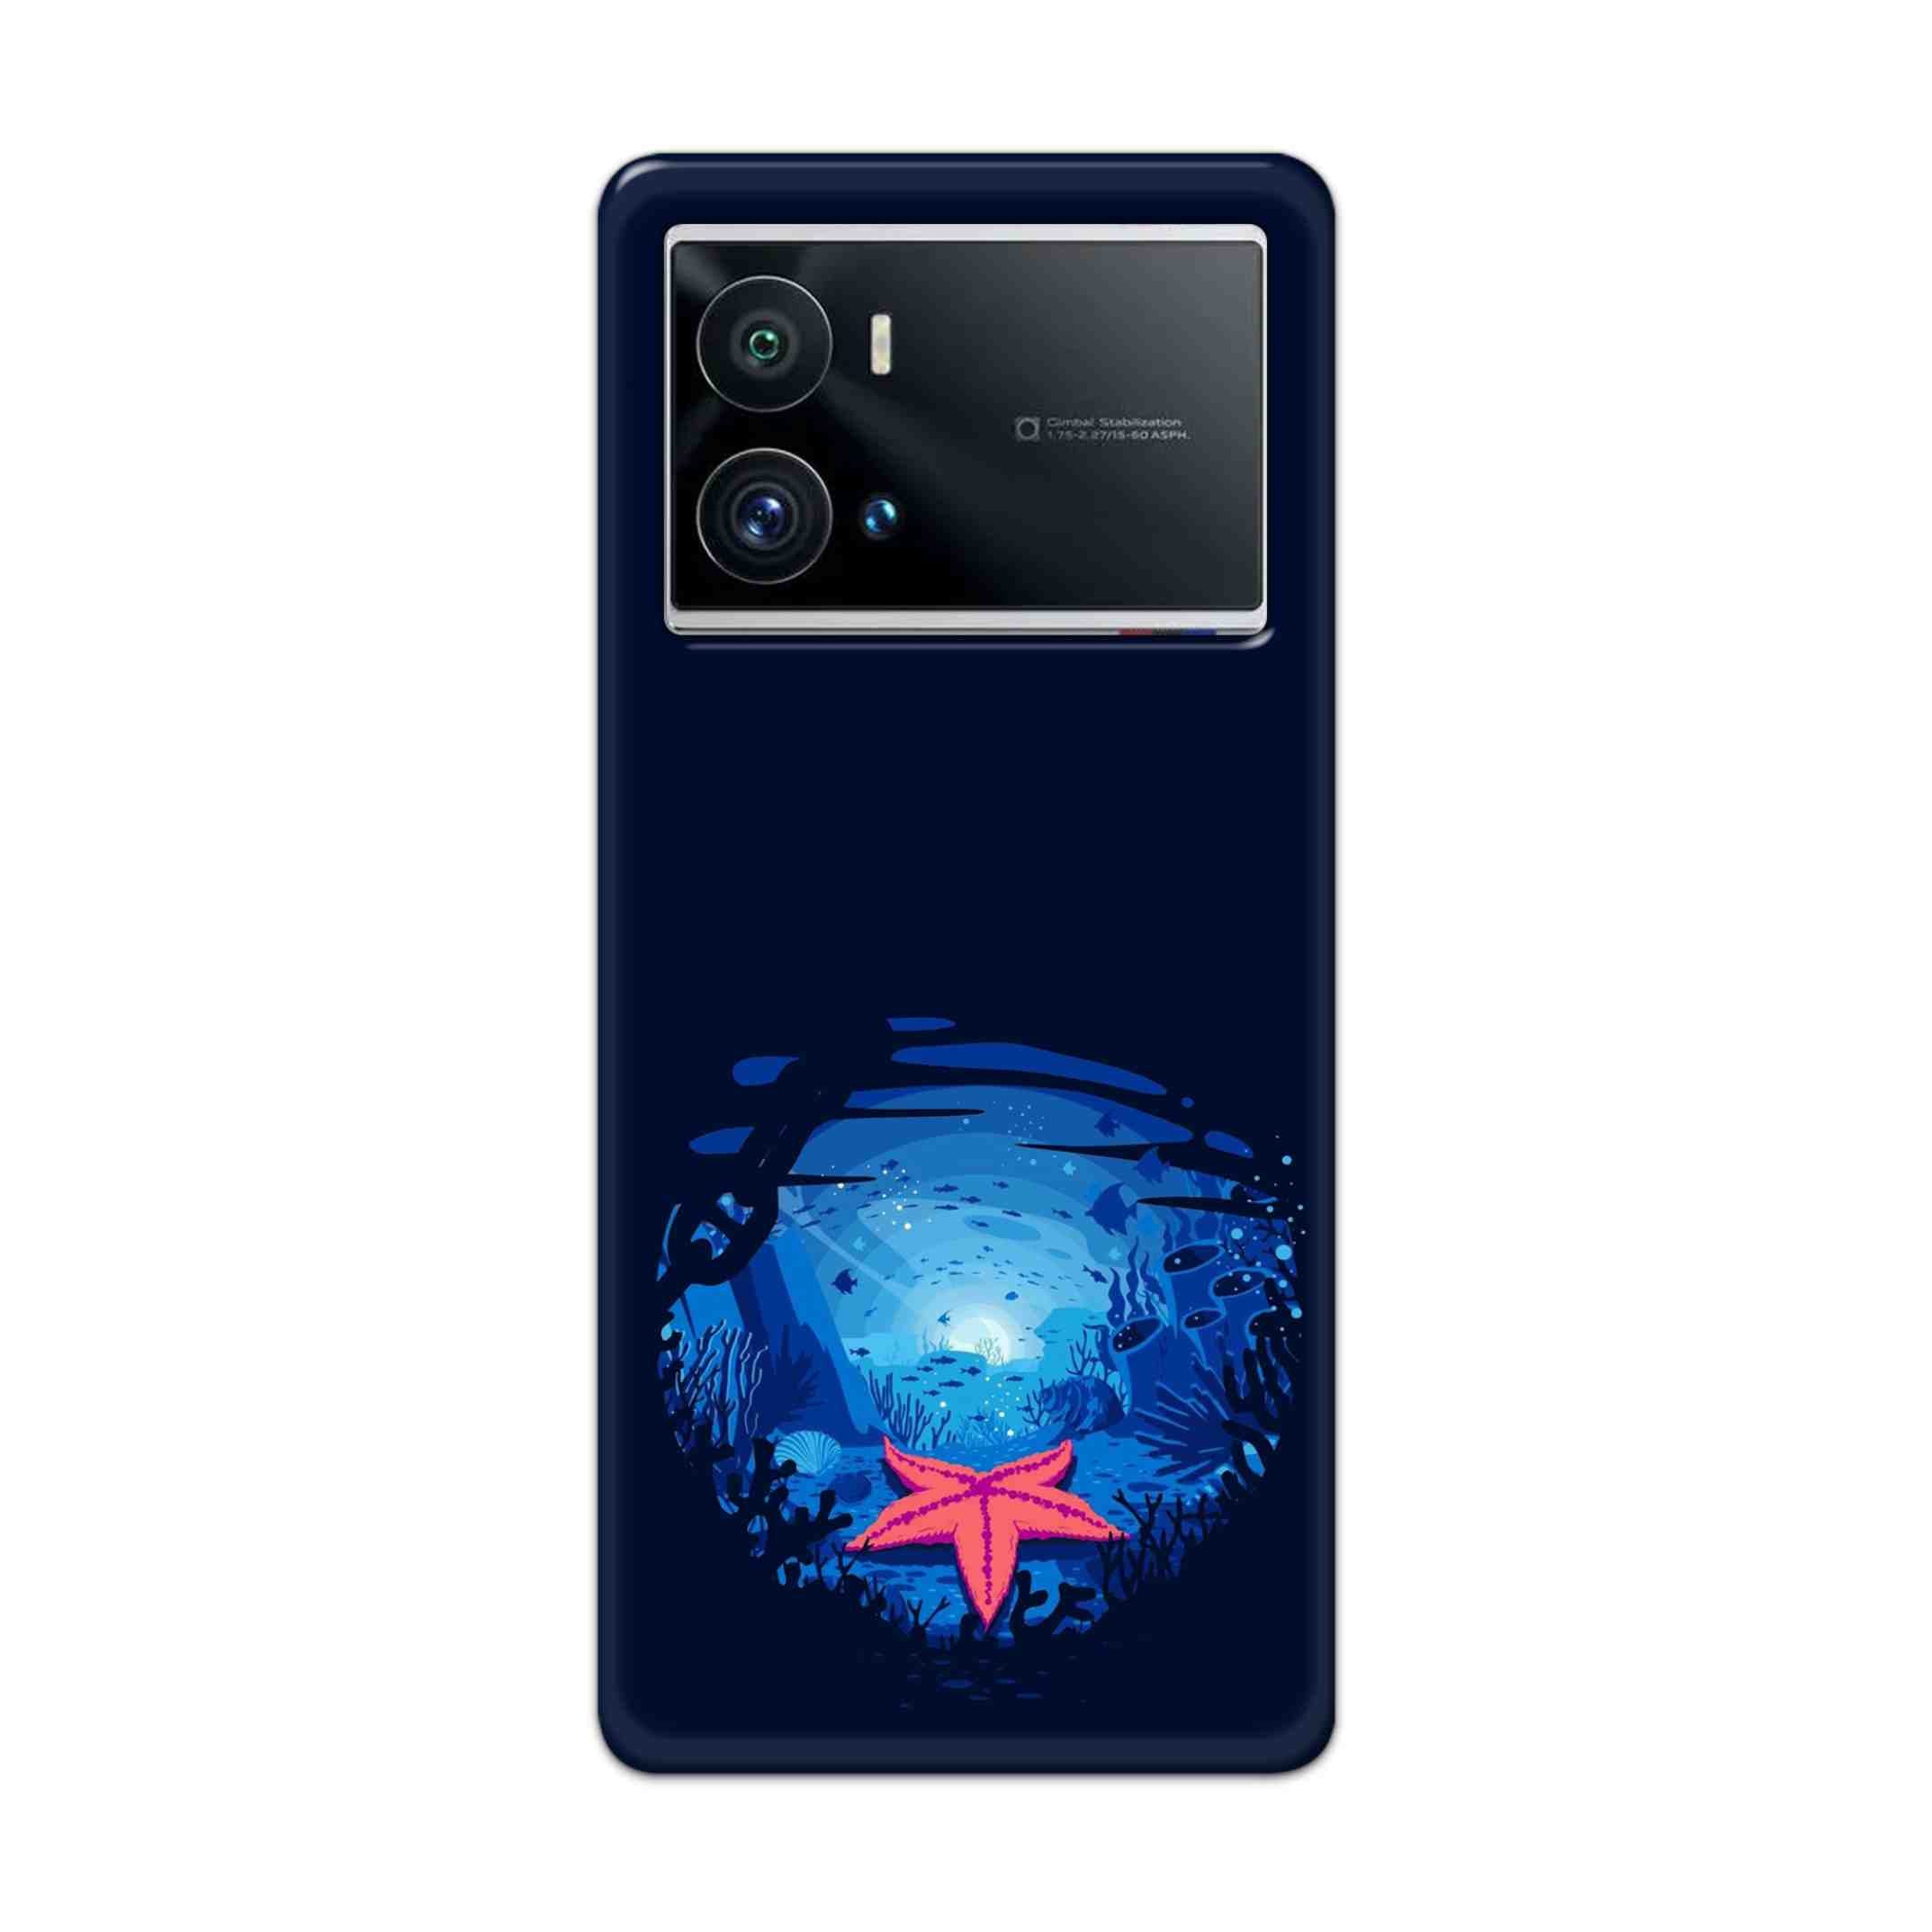 Buy Star Fresh Hard Back Mobile Phone Case Cover For iQOO 9 Pro 5G Online